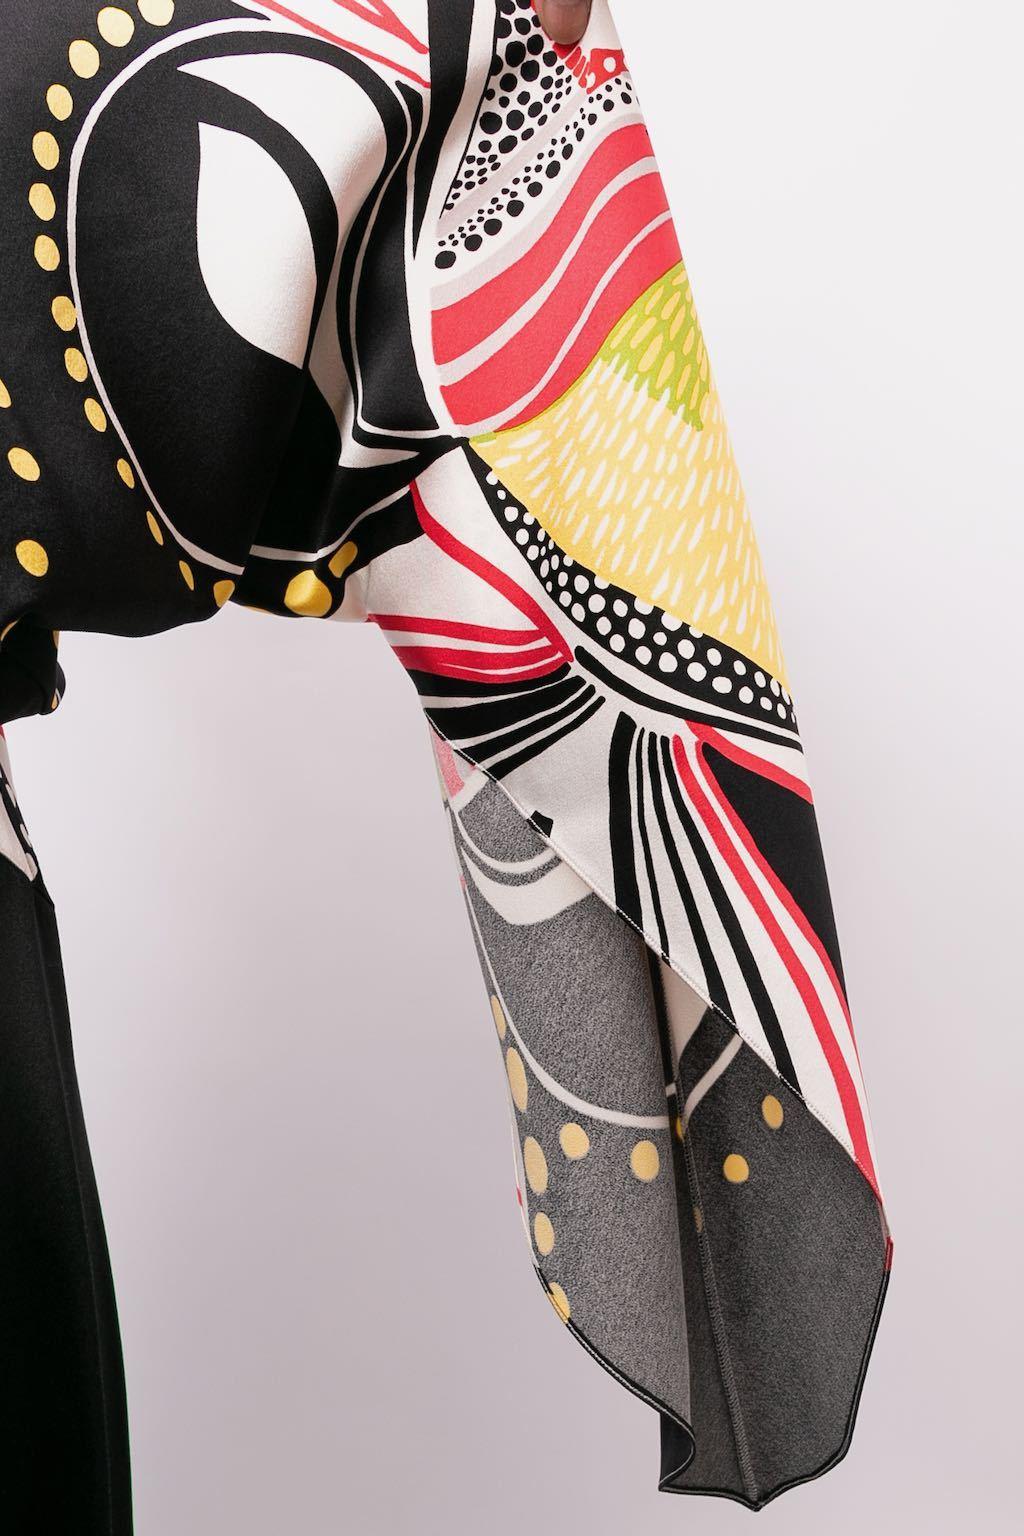 John Galliano Asymmetrical Silk Dress For Sale 3